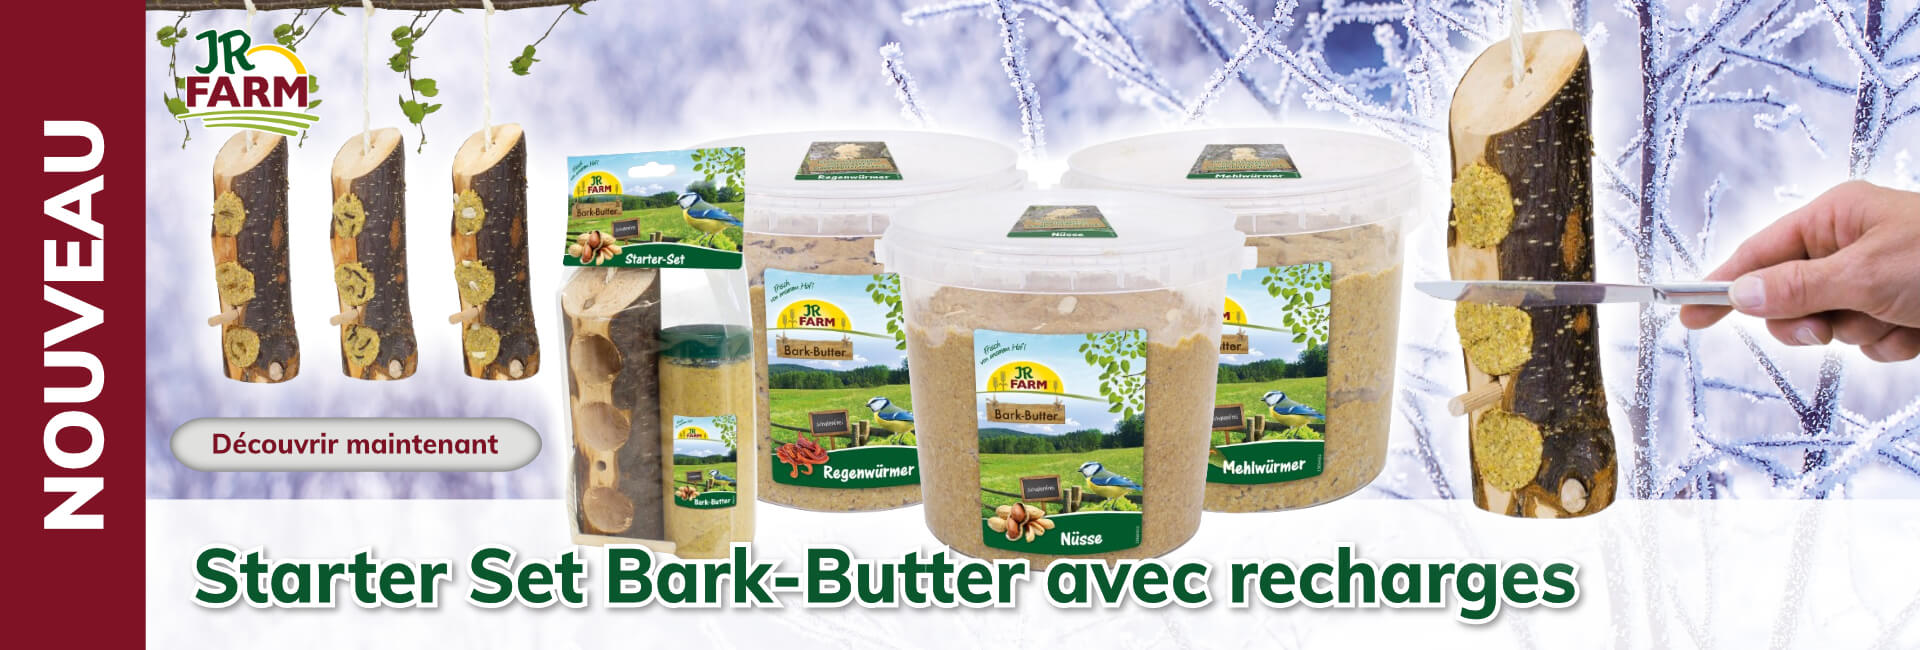 JR Farm Starter Set Bark-Butter avec recharges